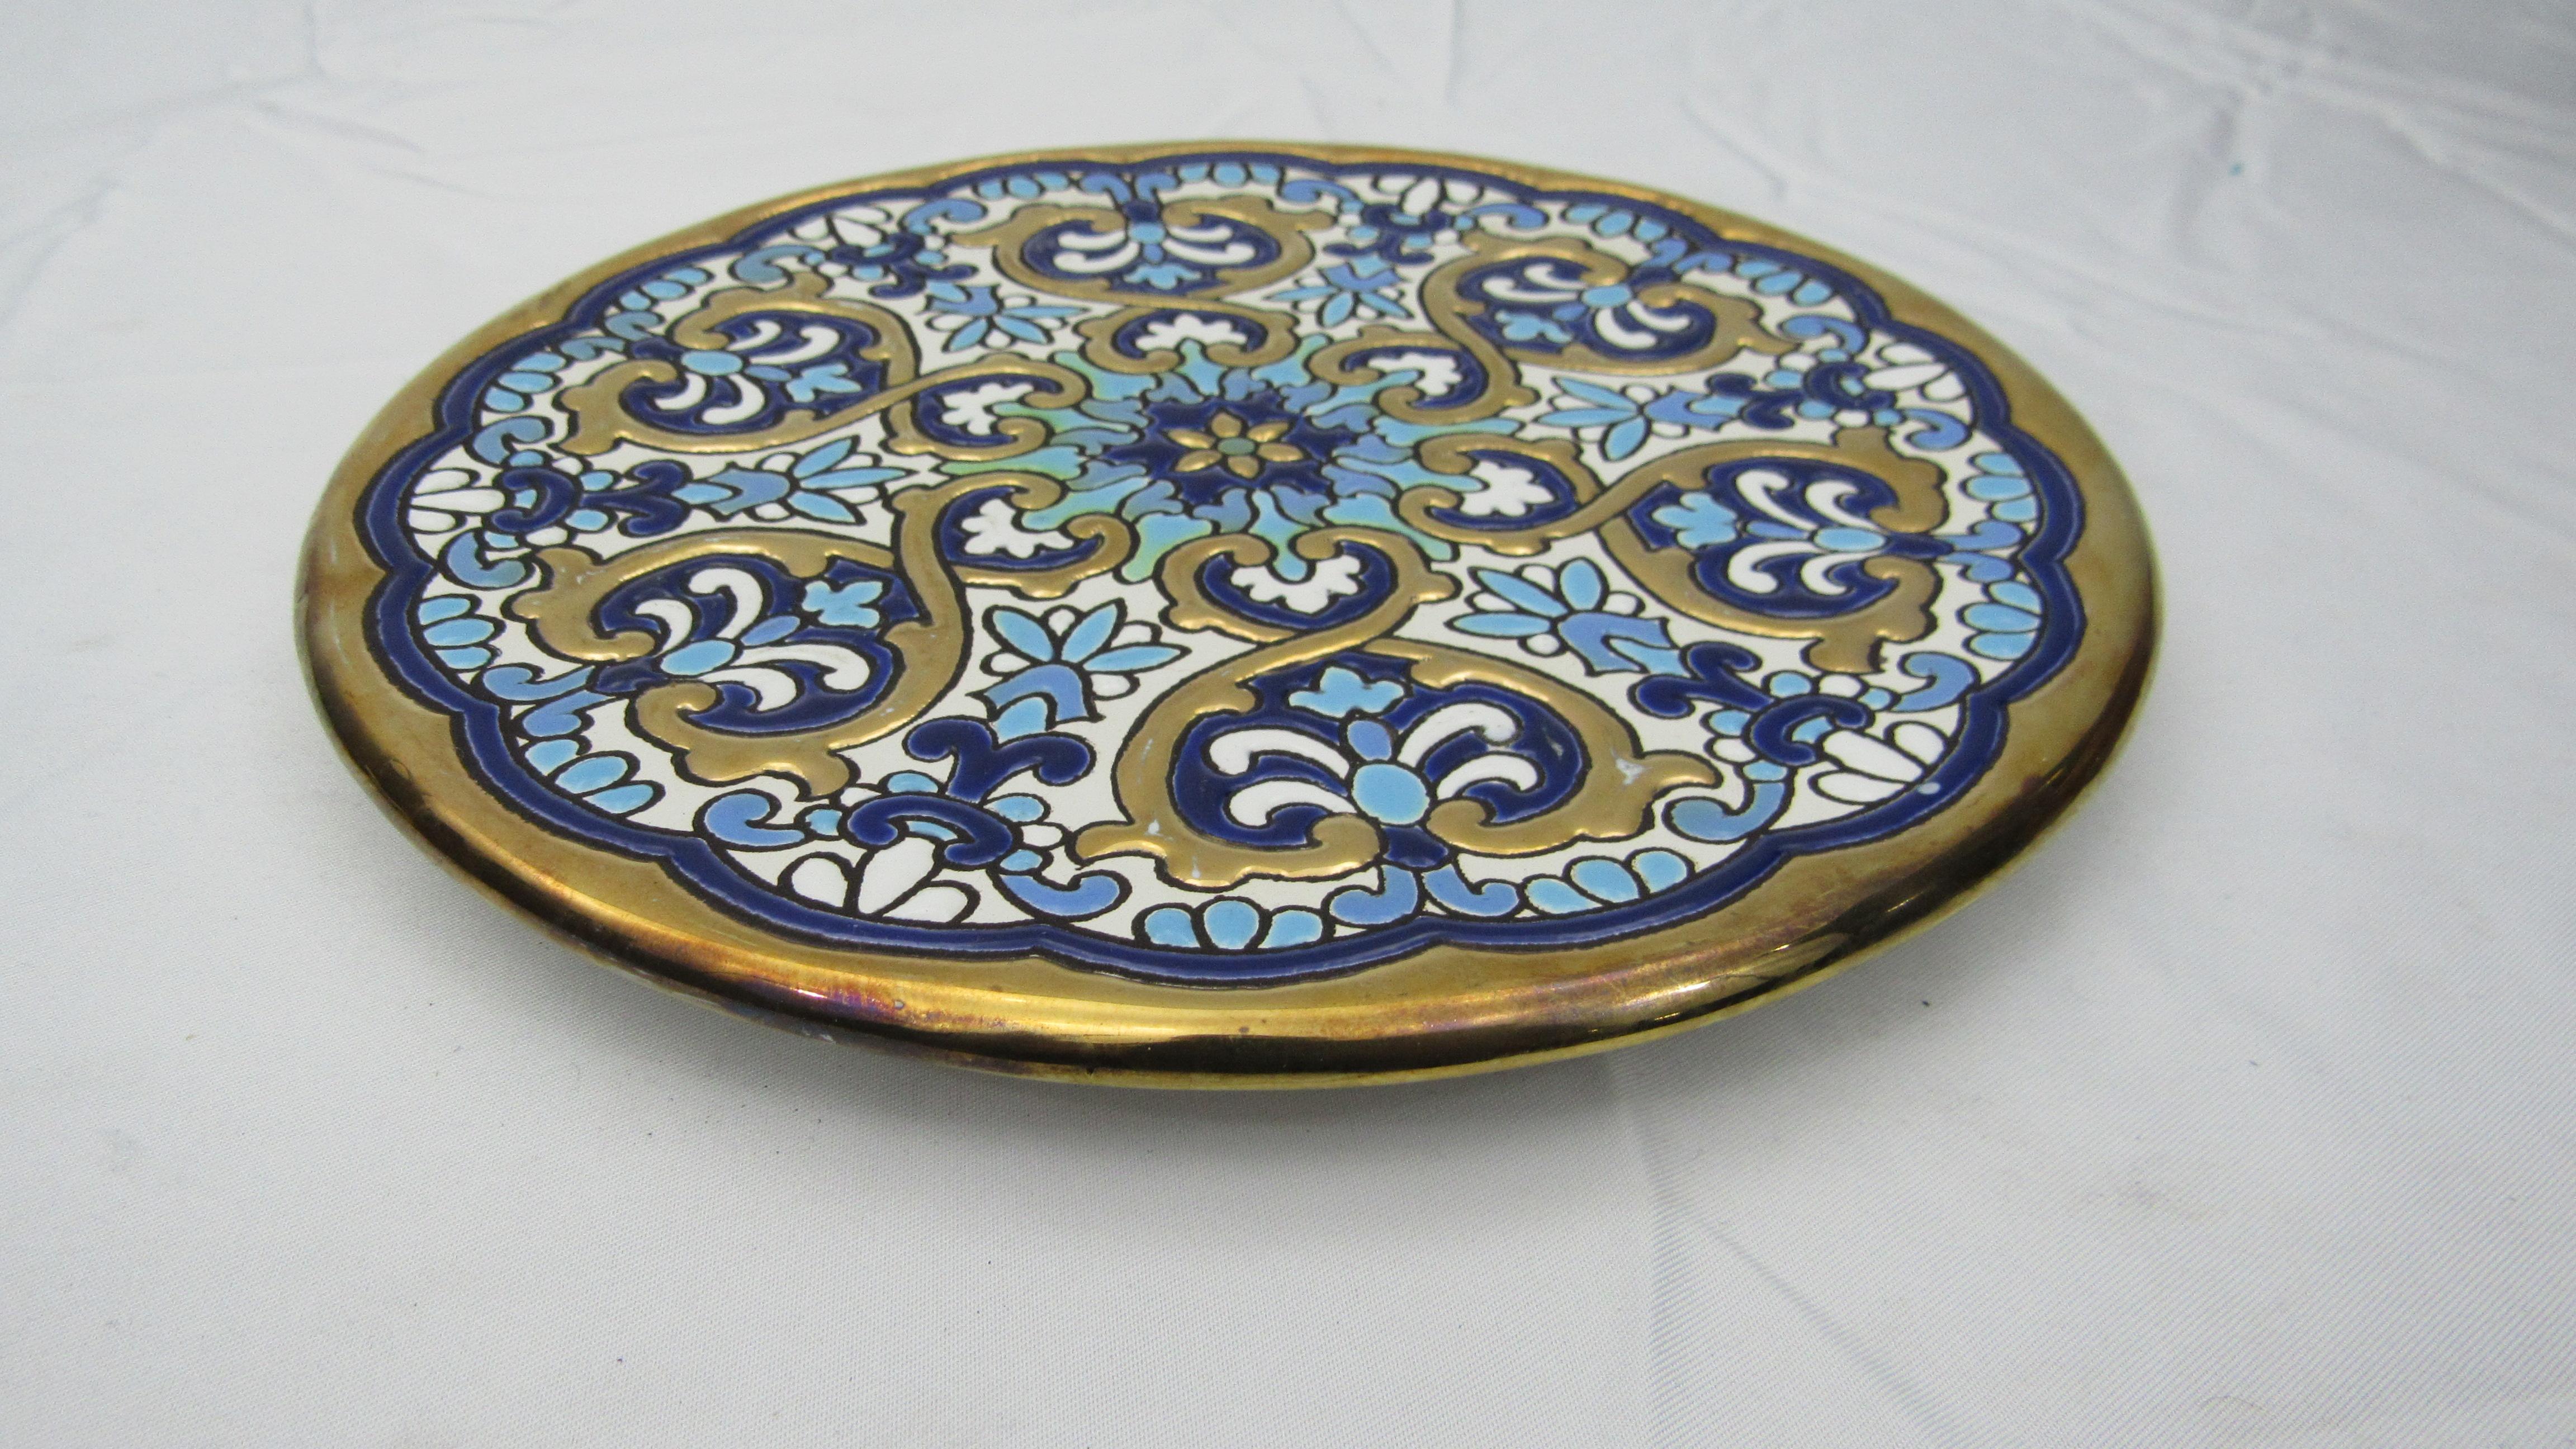 L Moreno Sevillarte enameled cake plate with 24-karat gold blue, measure: 11-1/2